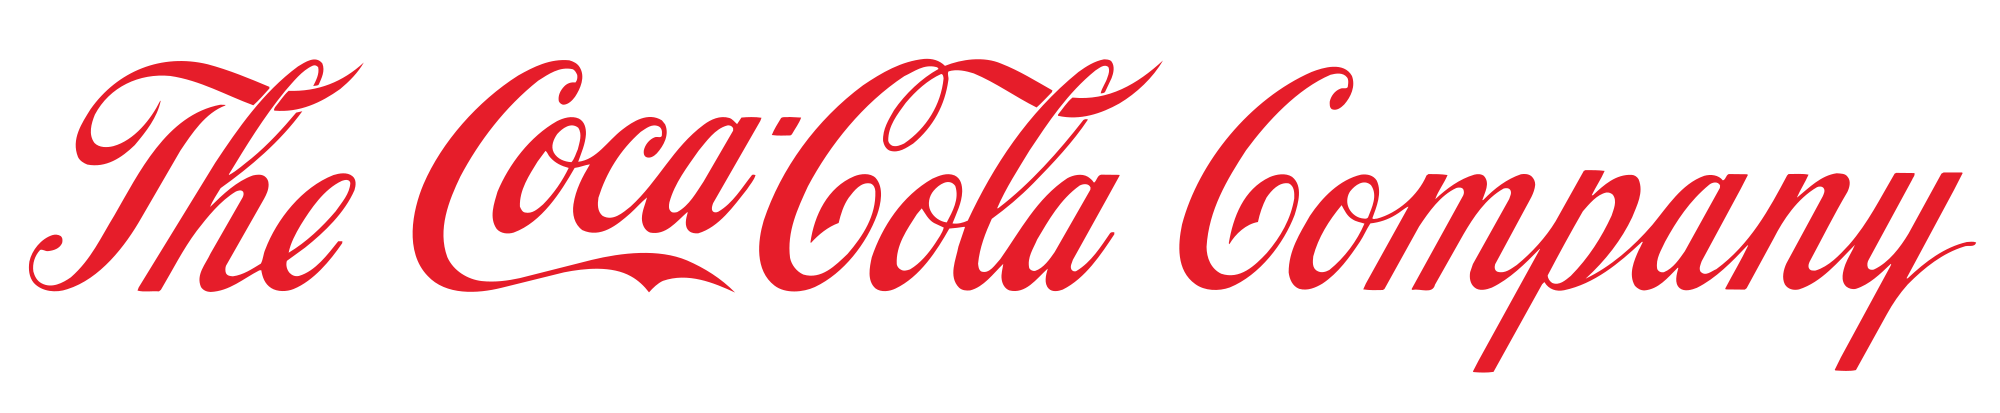 Cocola Logo - Coca Cola logo PNG images free download